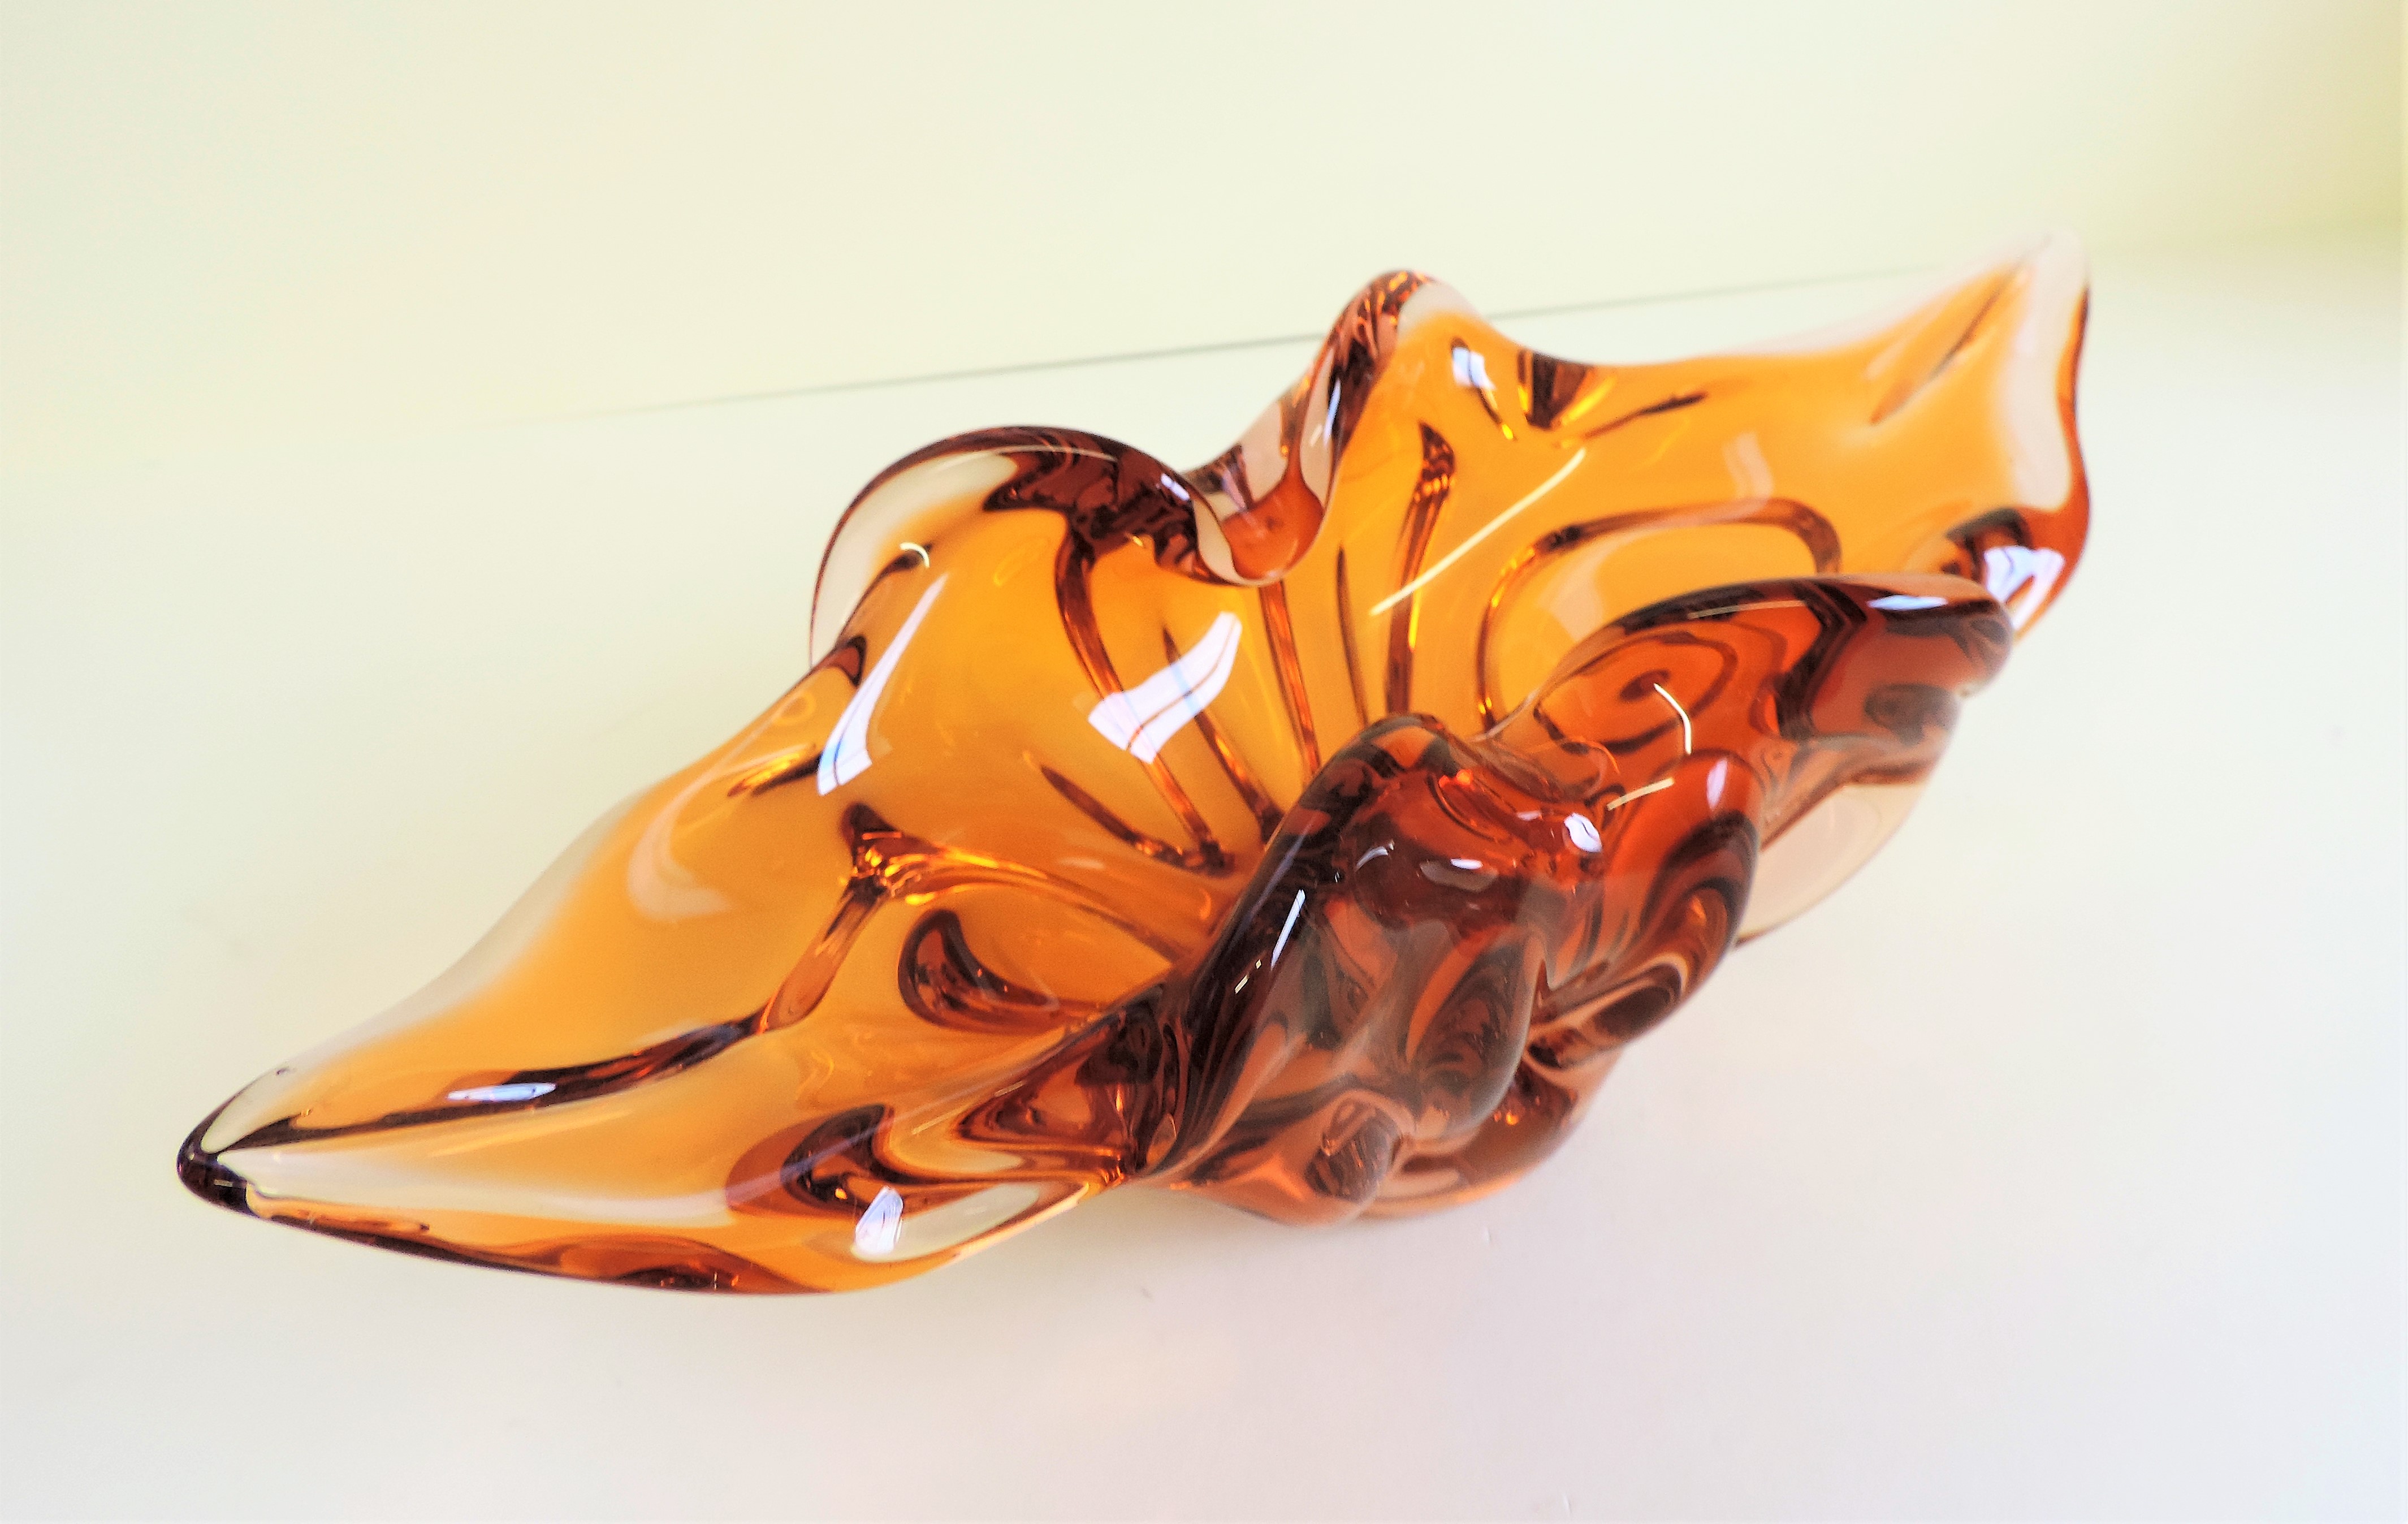 Chribska Czech Amber Glass Bowl by Josef Hospodka - Image 2 of 5